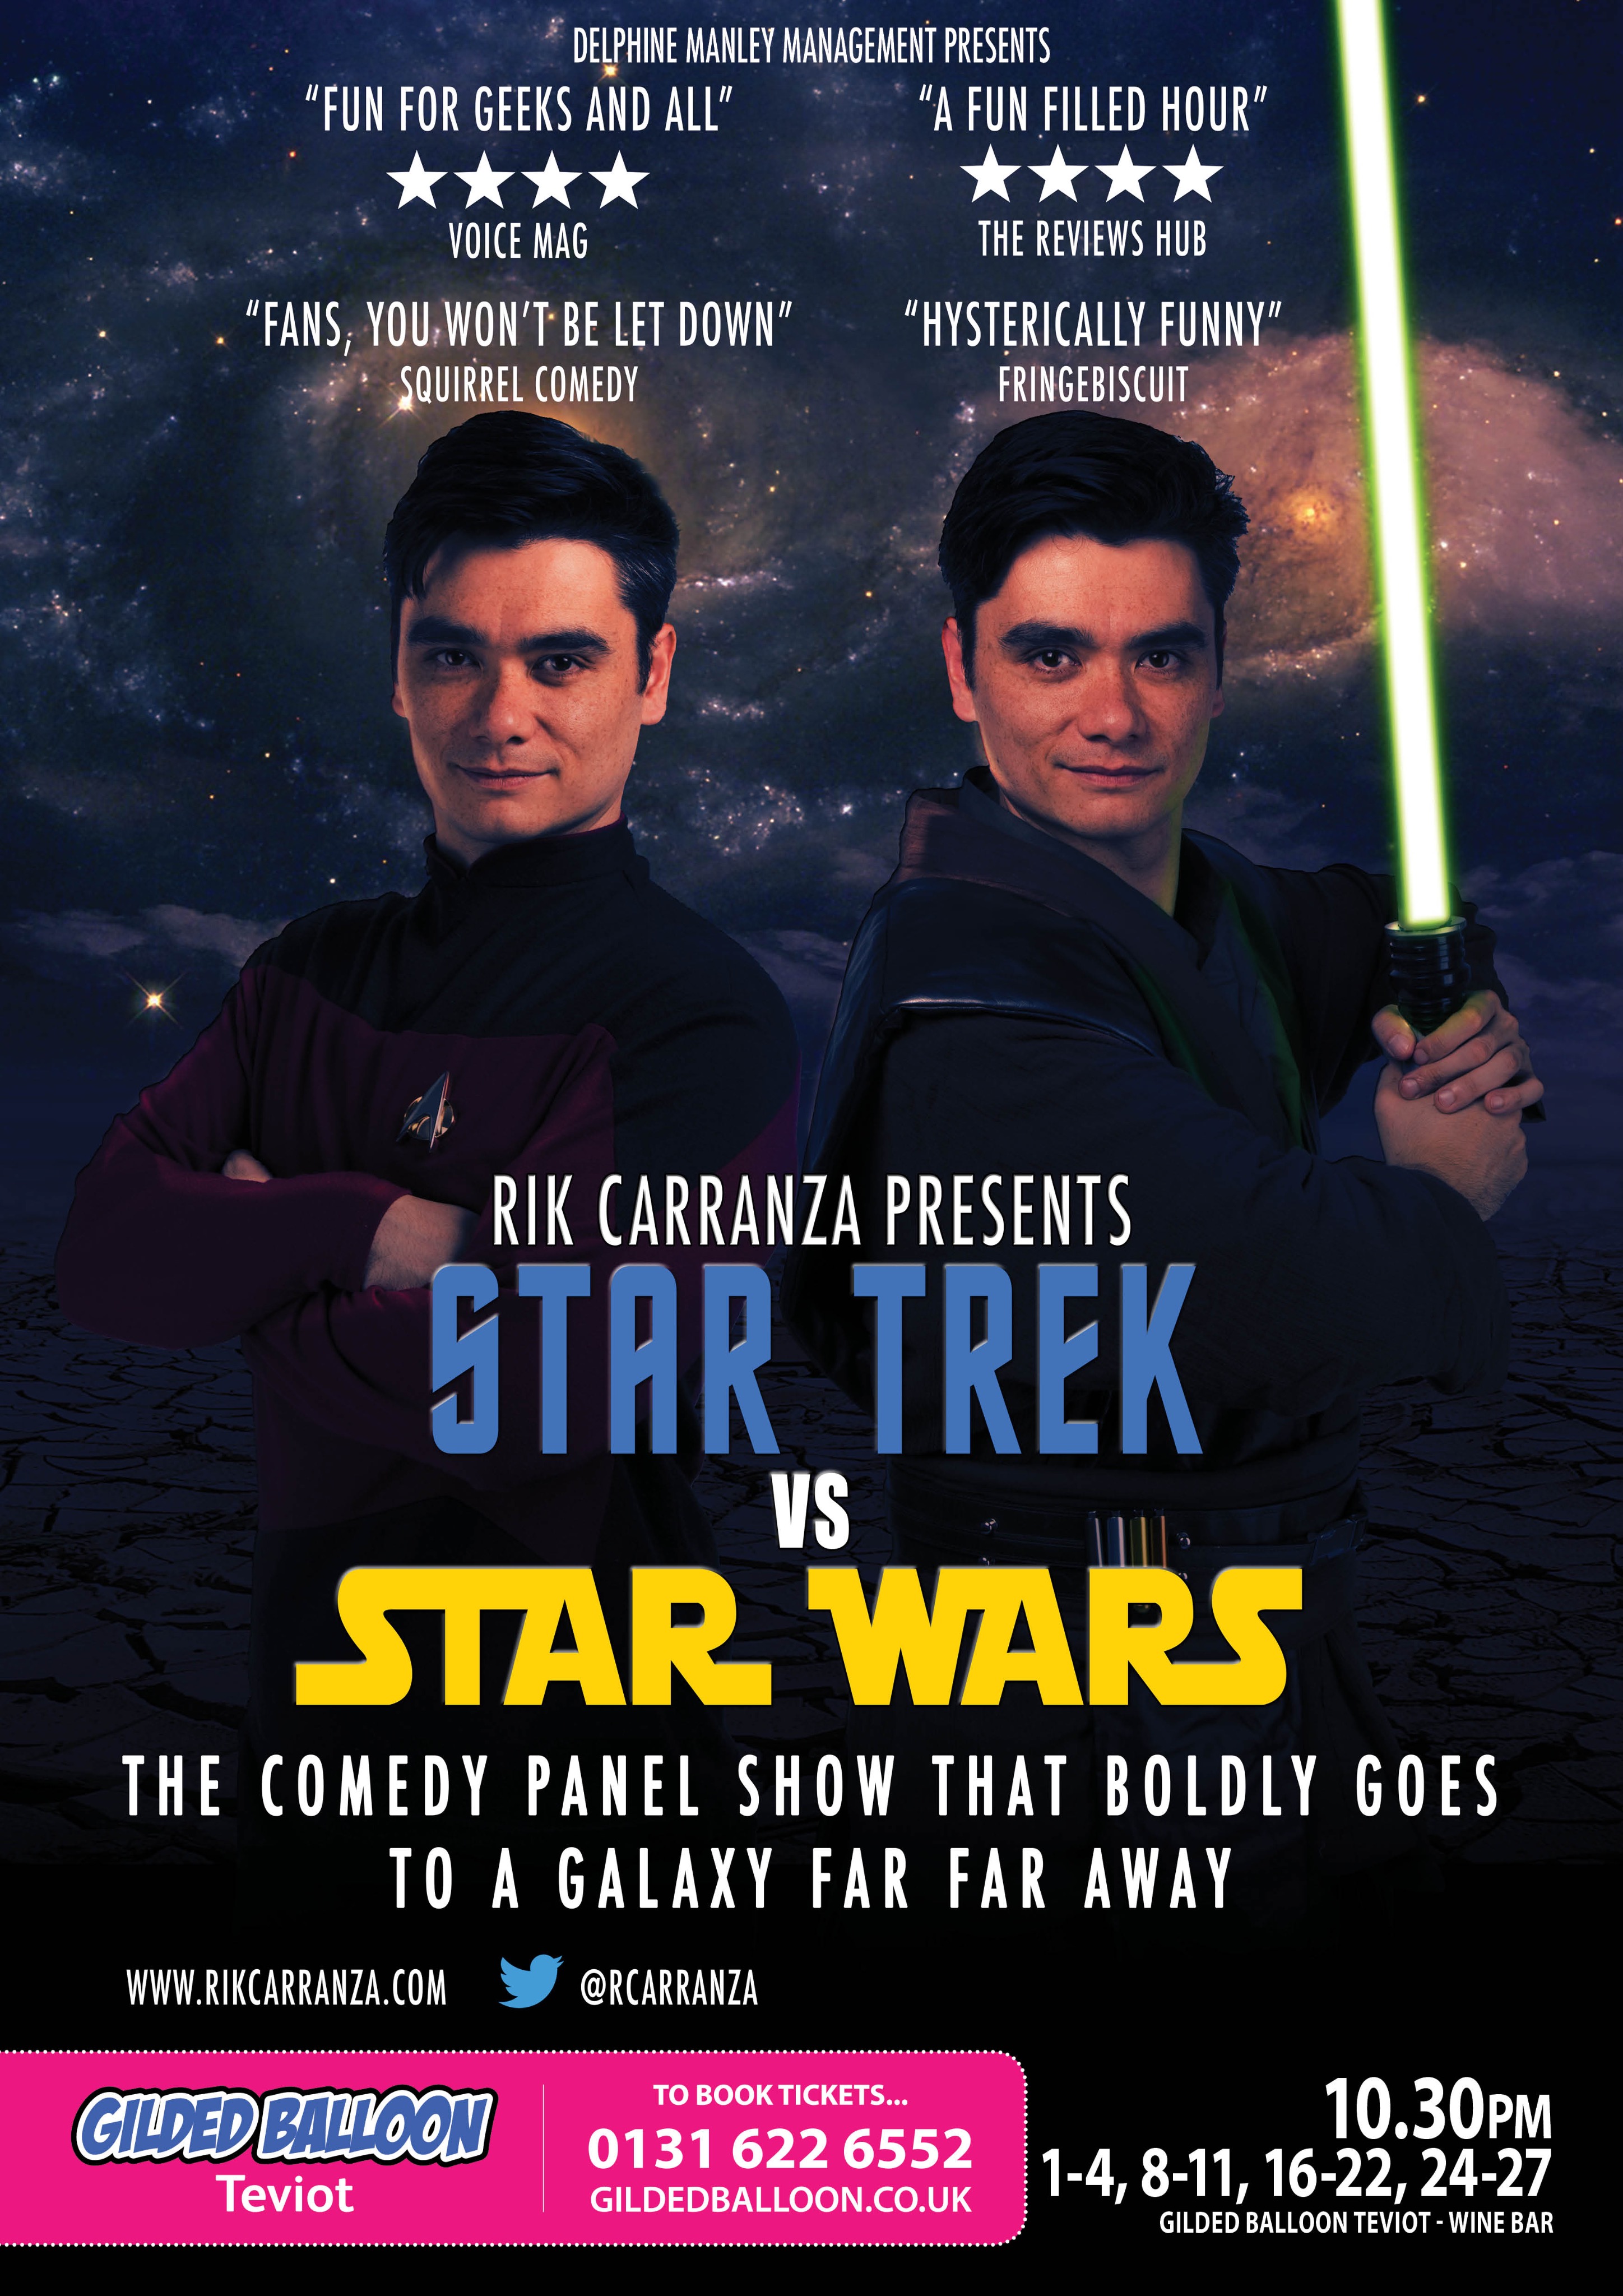 The poster for Rik Carranza presents: Star Trek vs Star Wars